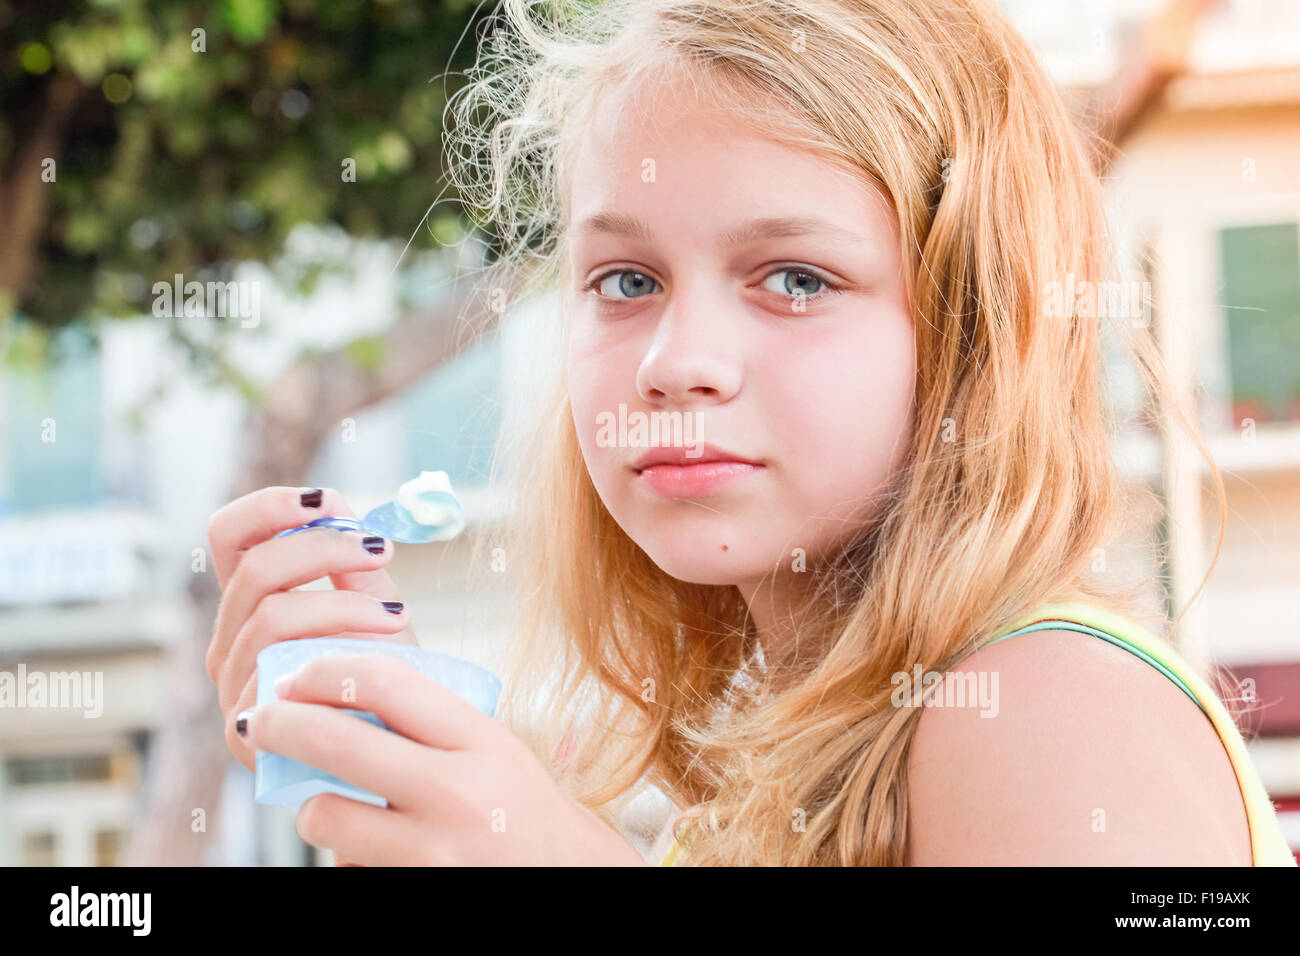 Blond Caucasian teenage girl with frozen yogurt, closeup outdoor portrait with natural light Stock Photo